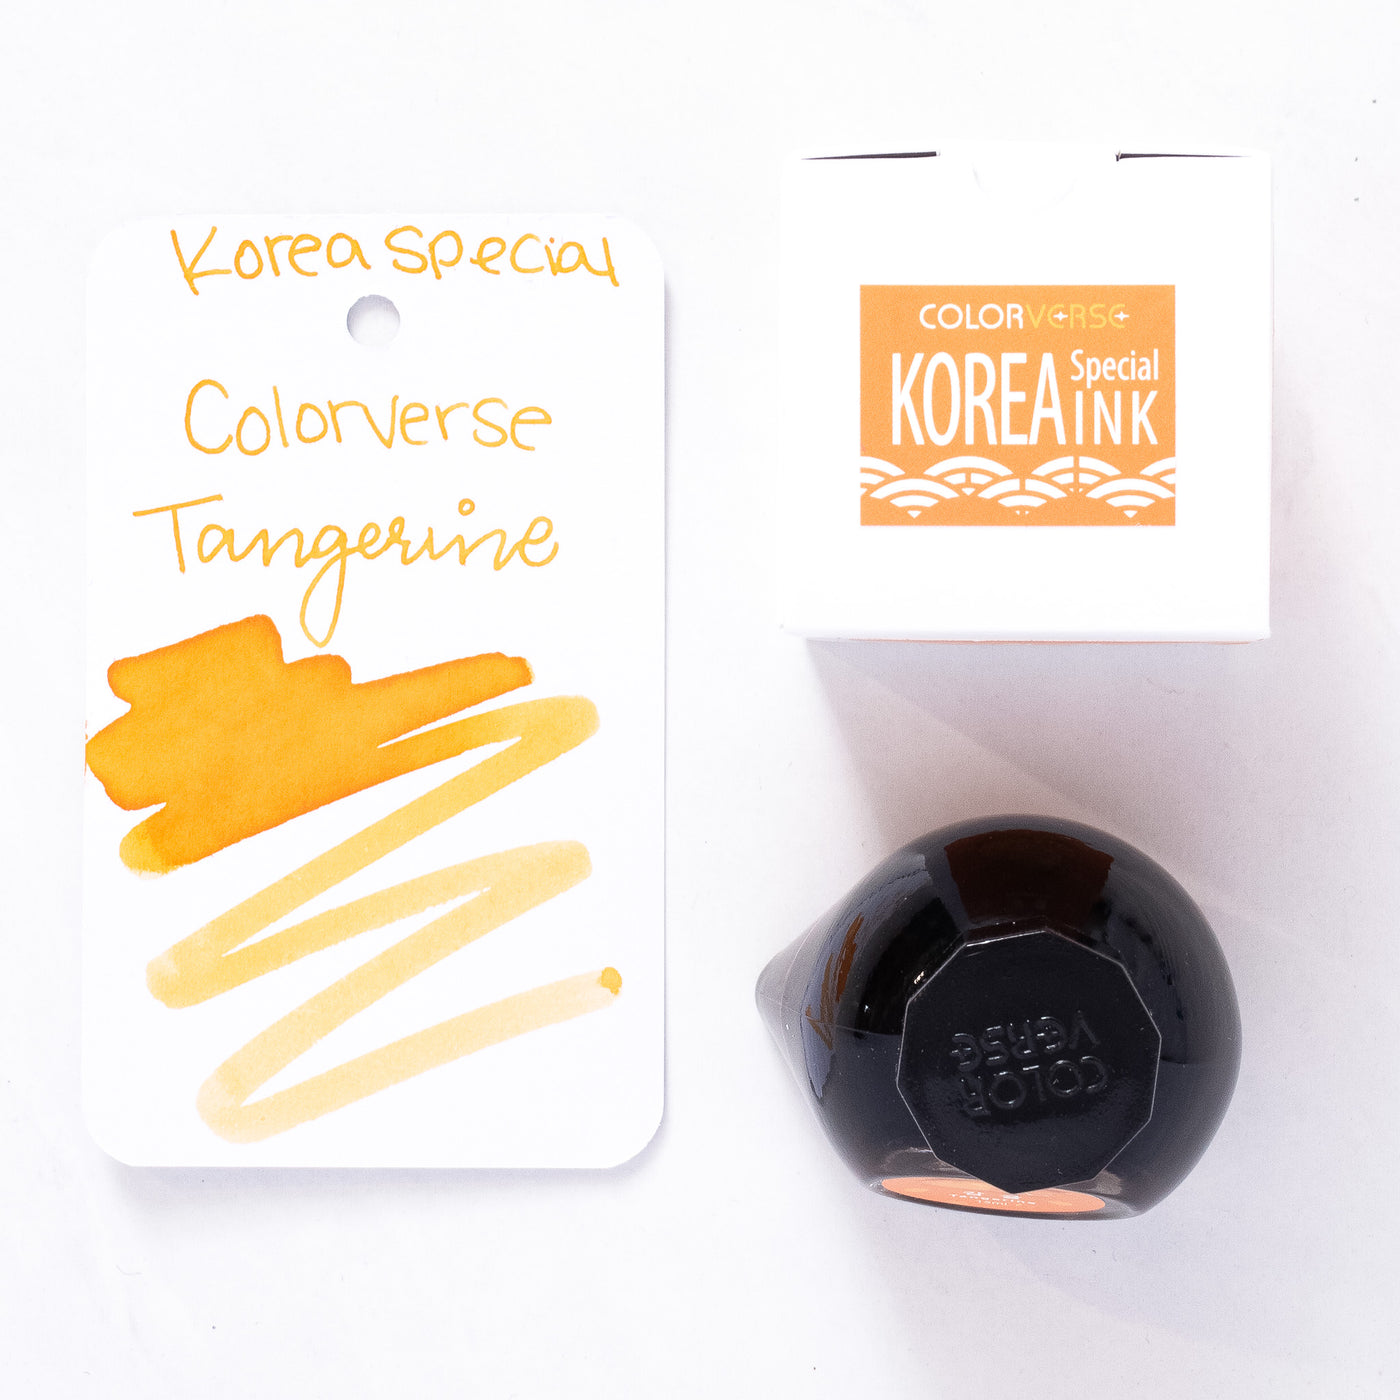 Colorverse Korea Special Korea Tangerine Ink Bottle 15ml